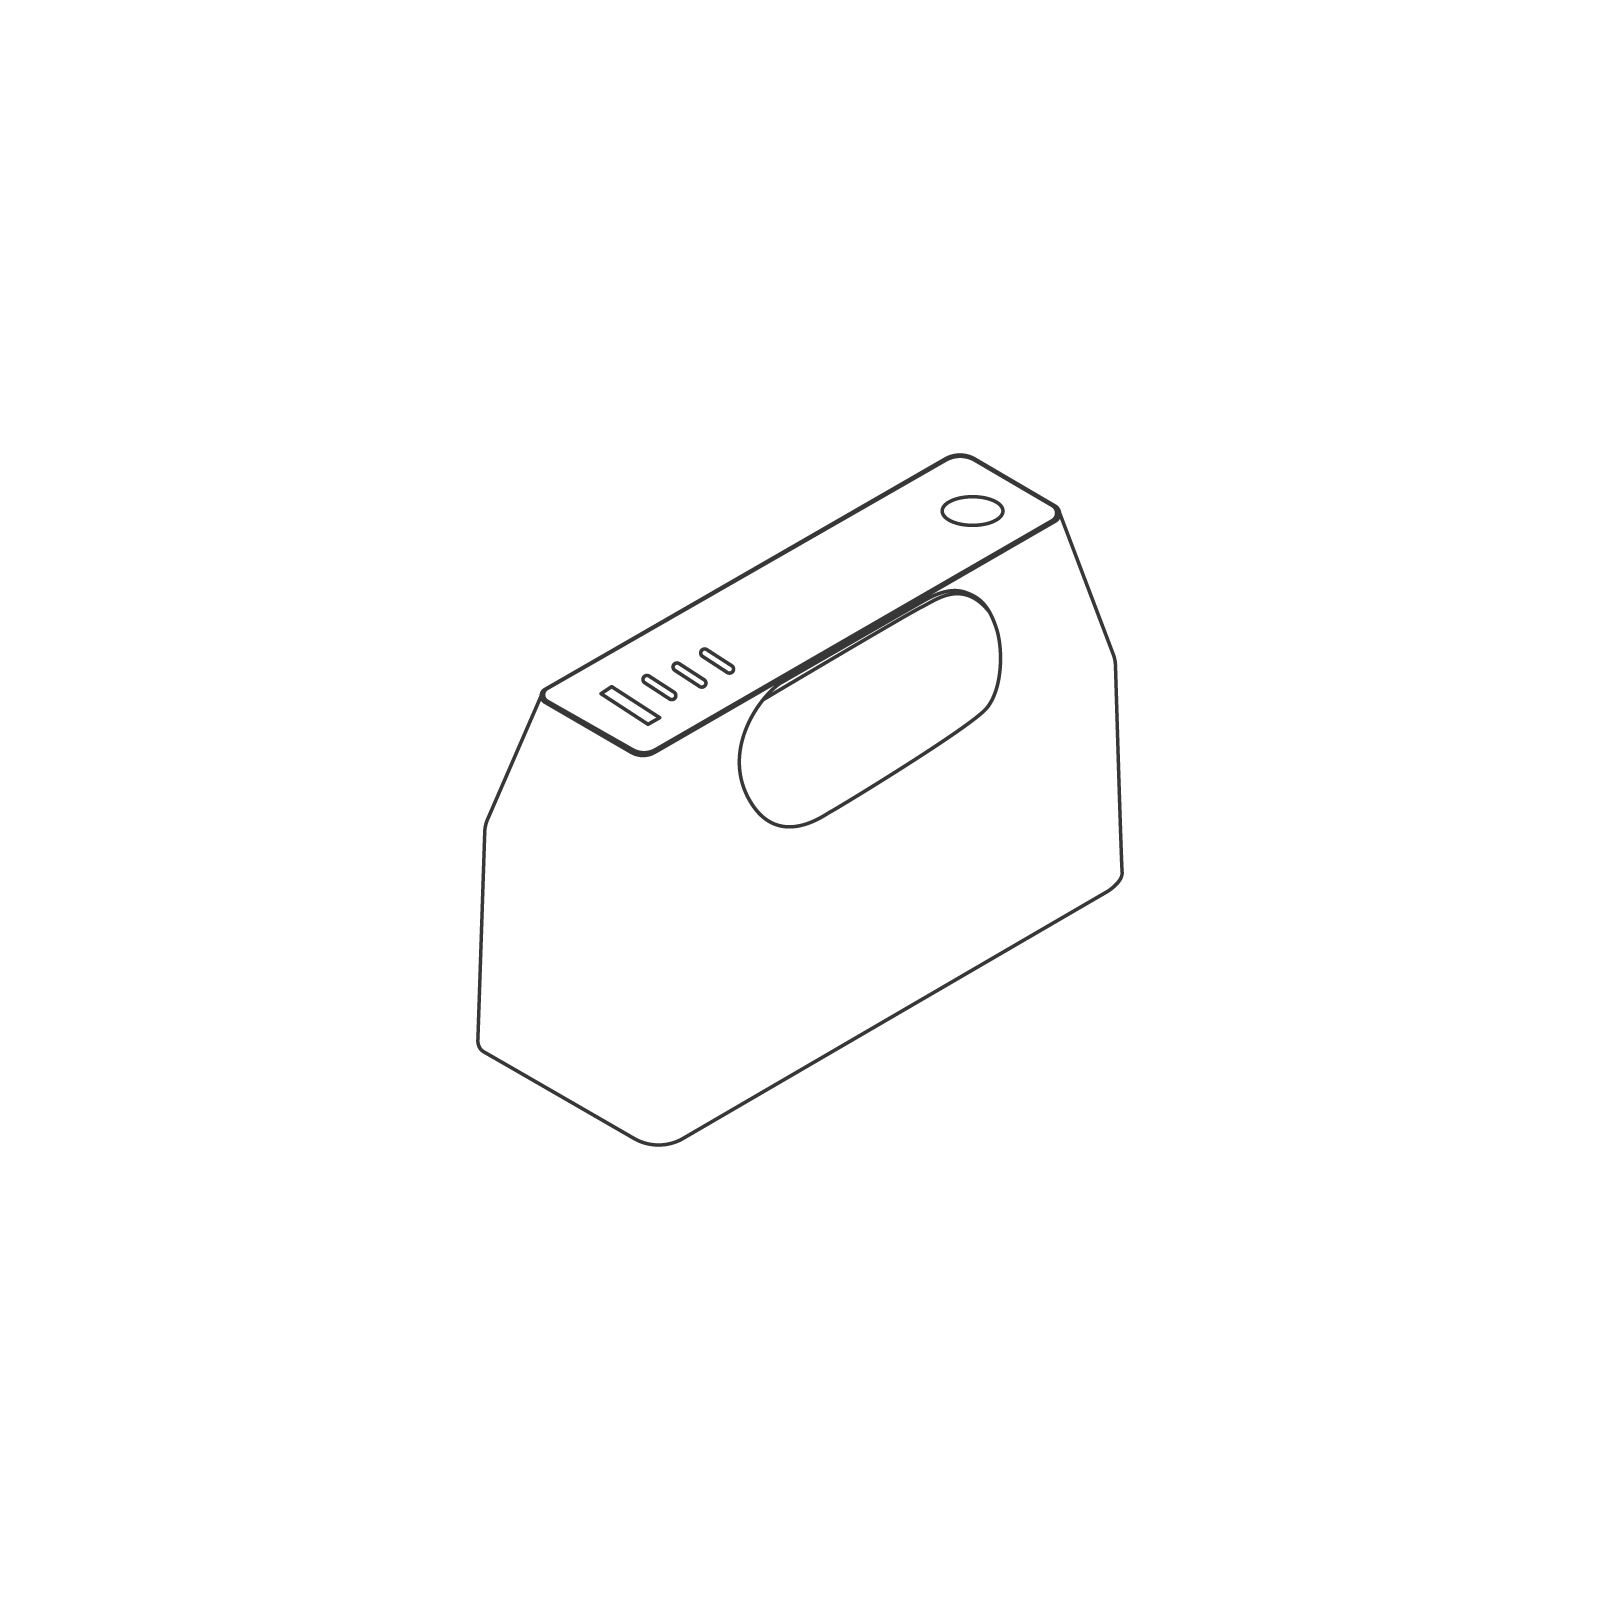 A line drawing - OE1 Powerbox